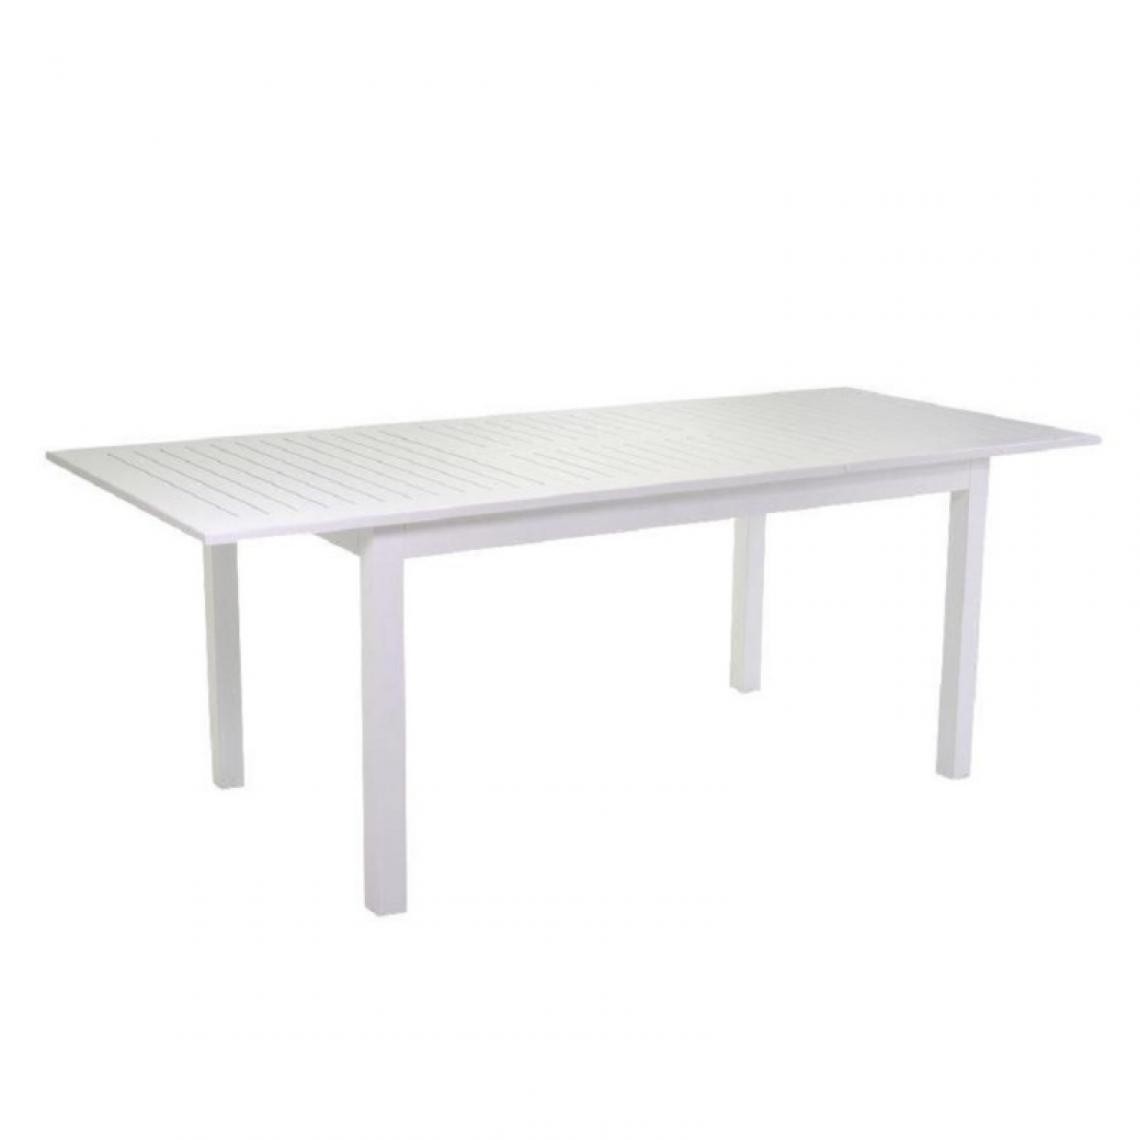 Webmarketpoint - Table de jardin extensible en aluminium blanc cm 90 x 210/280 xh 73 - Tables de jardin